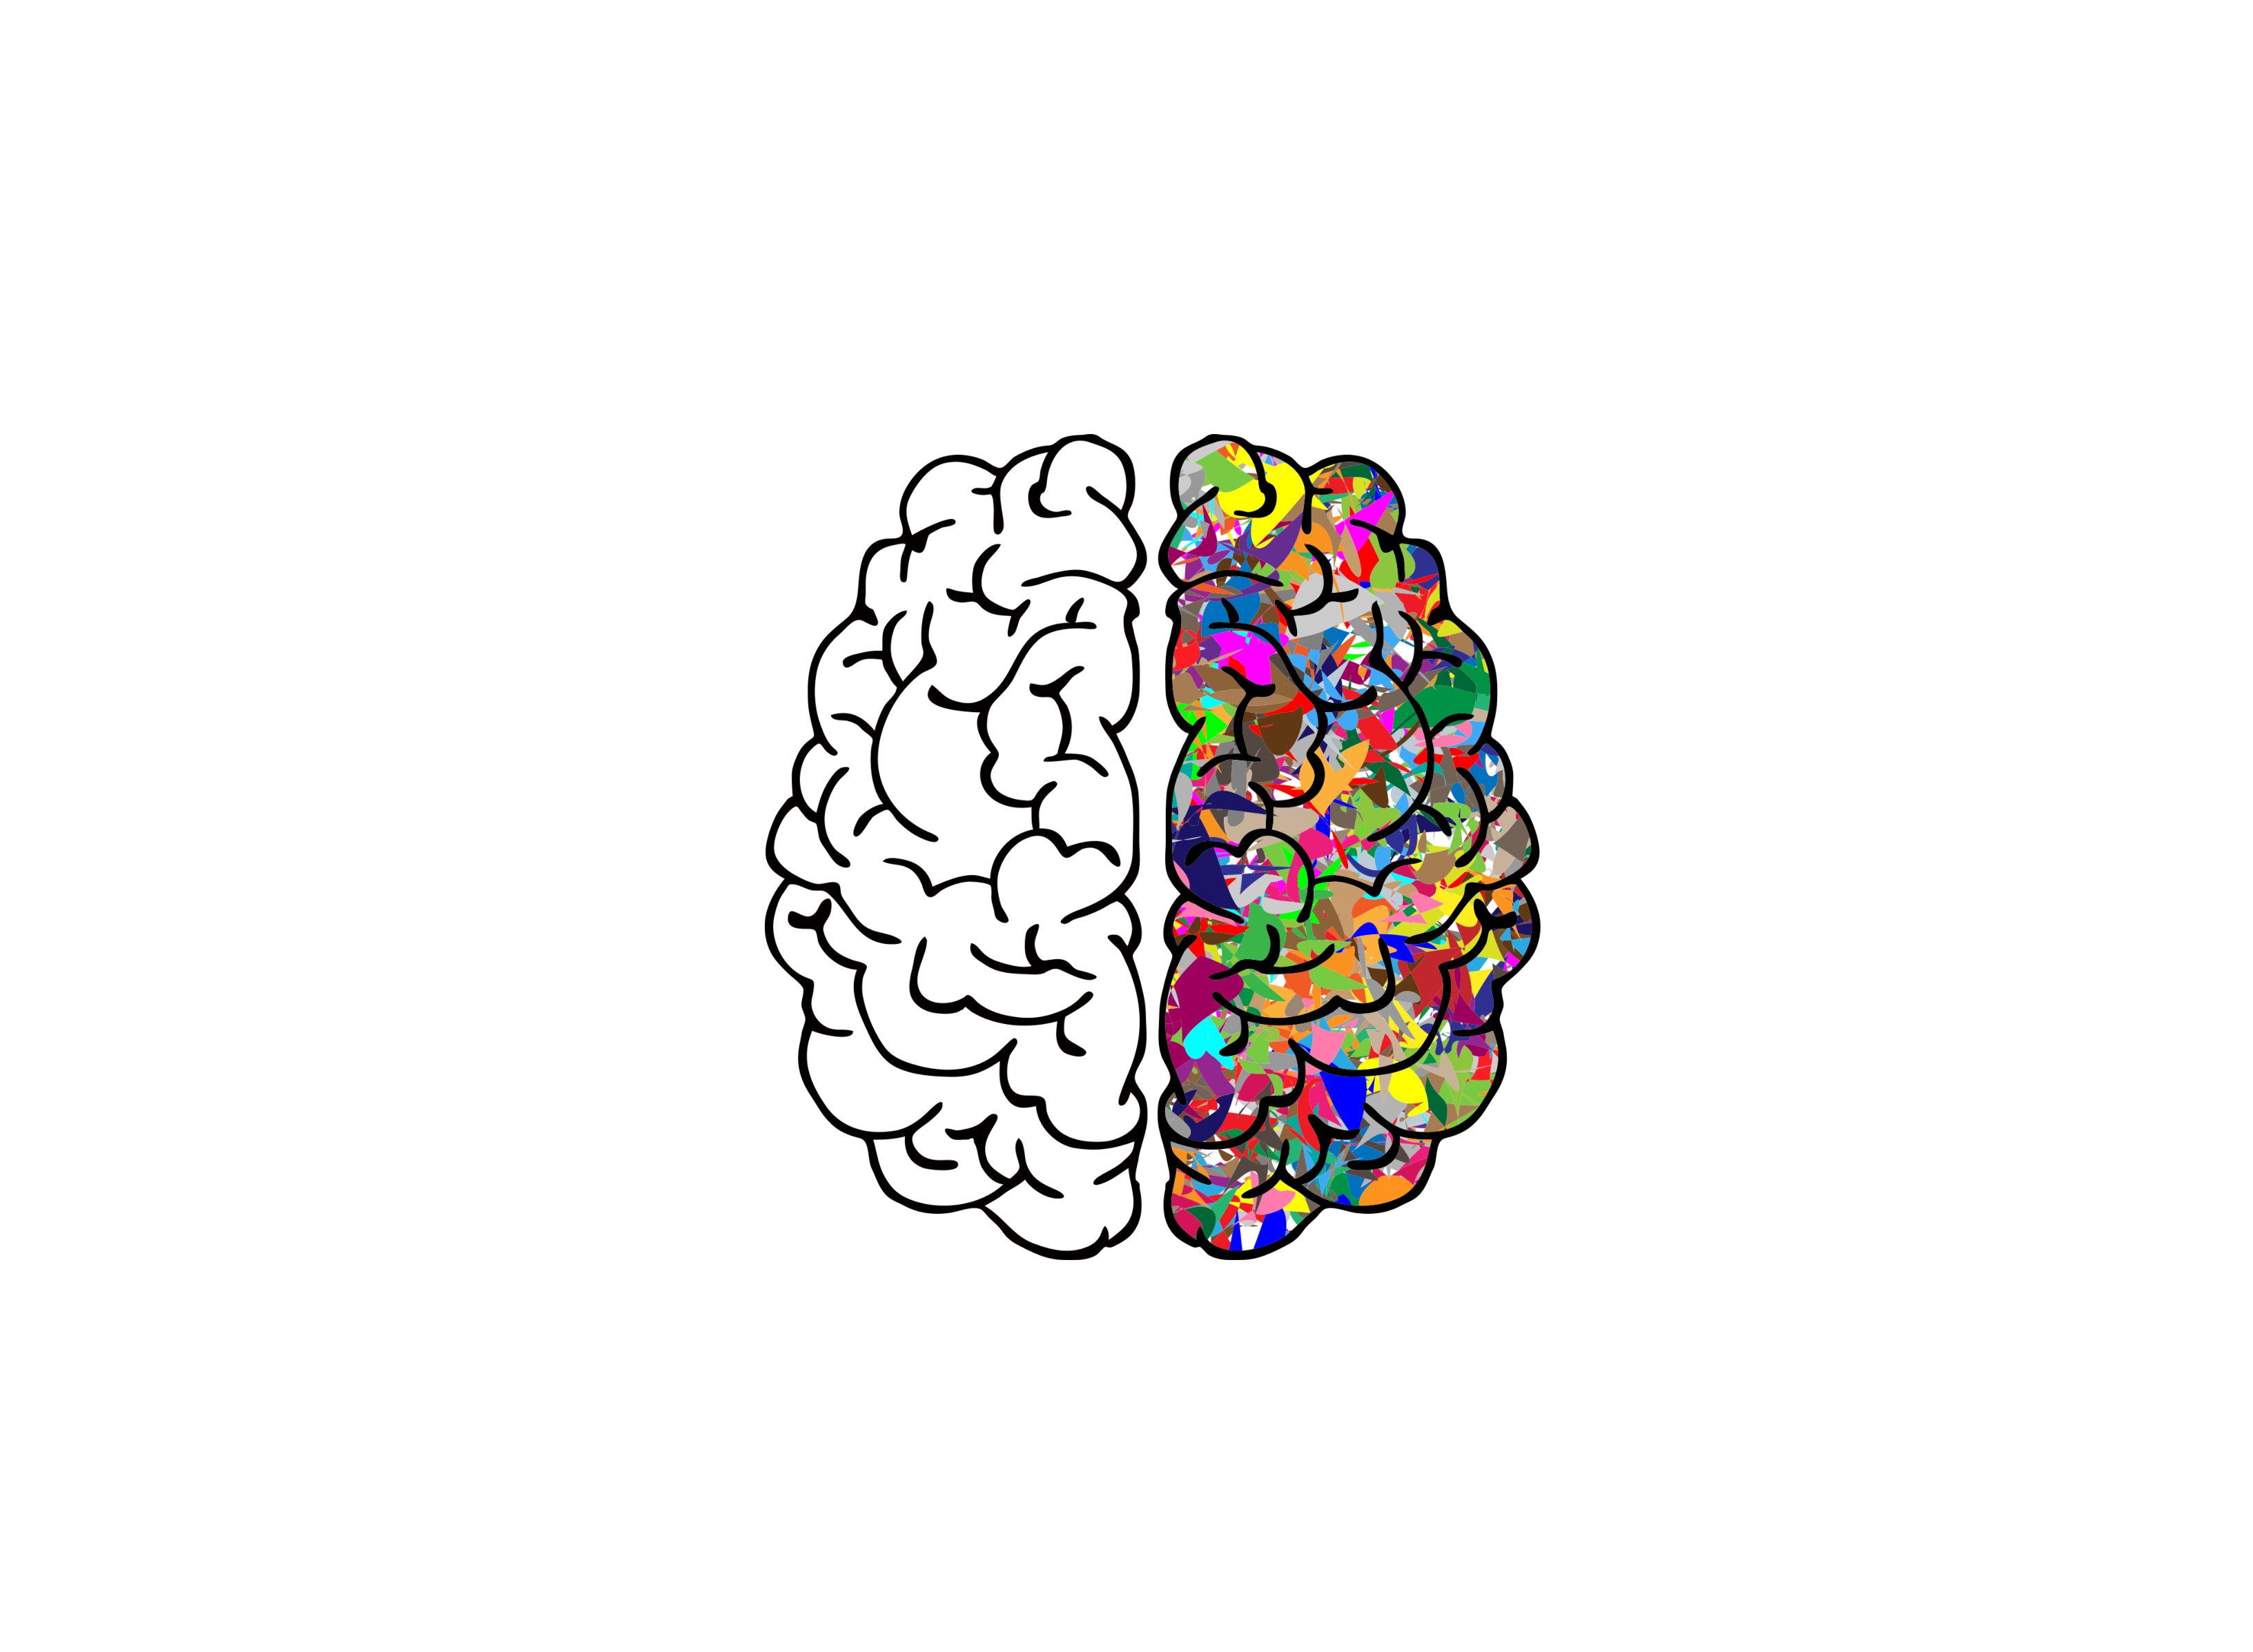 Dues meitats cervell